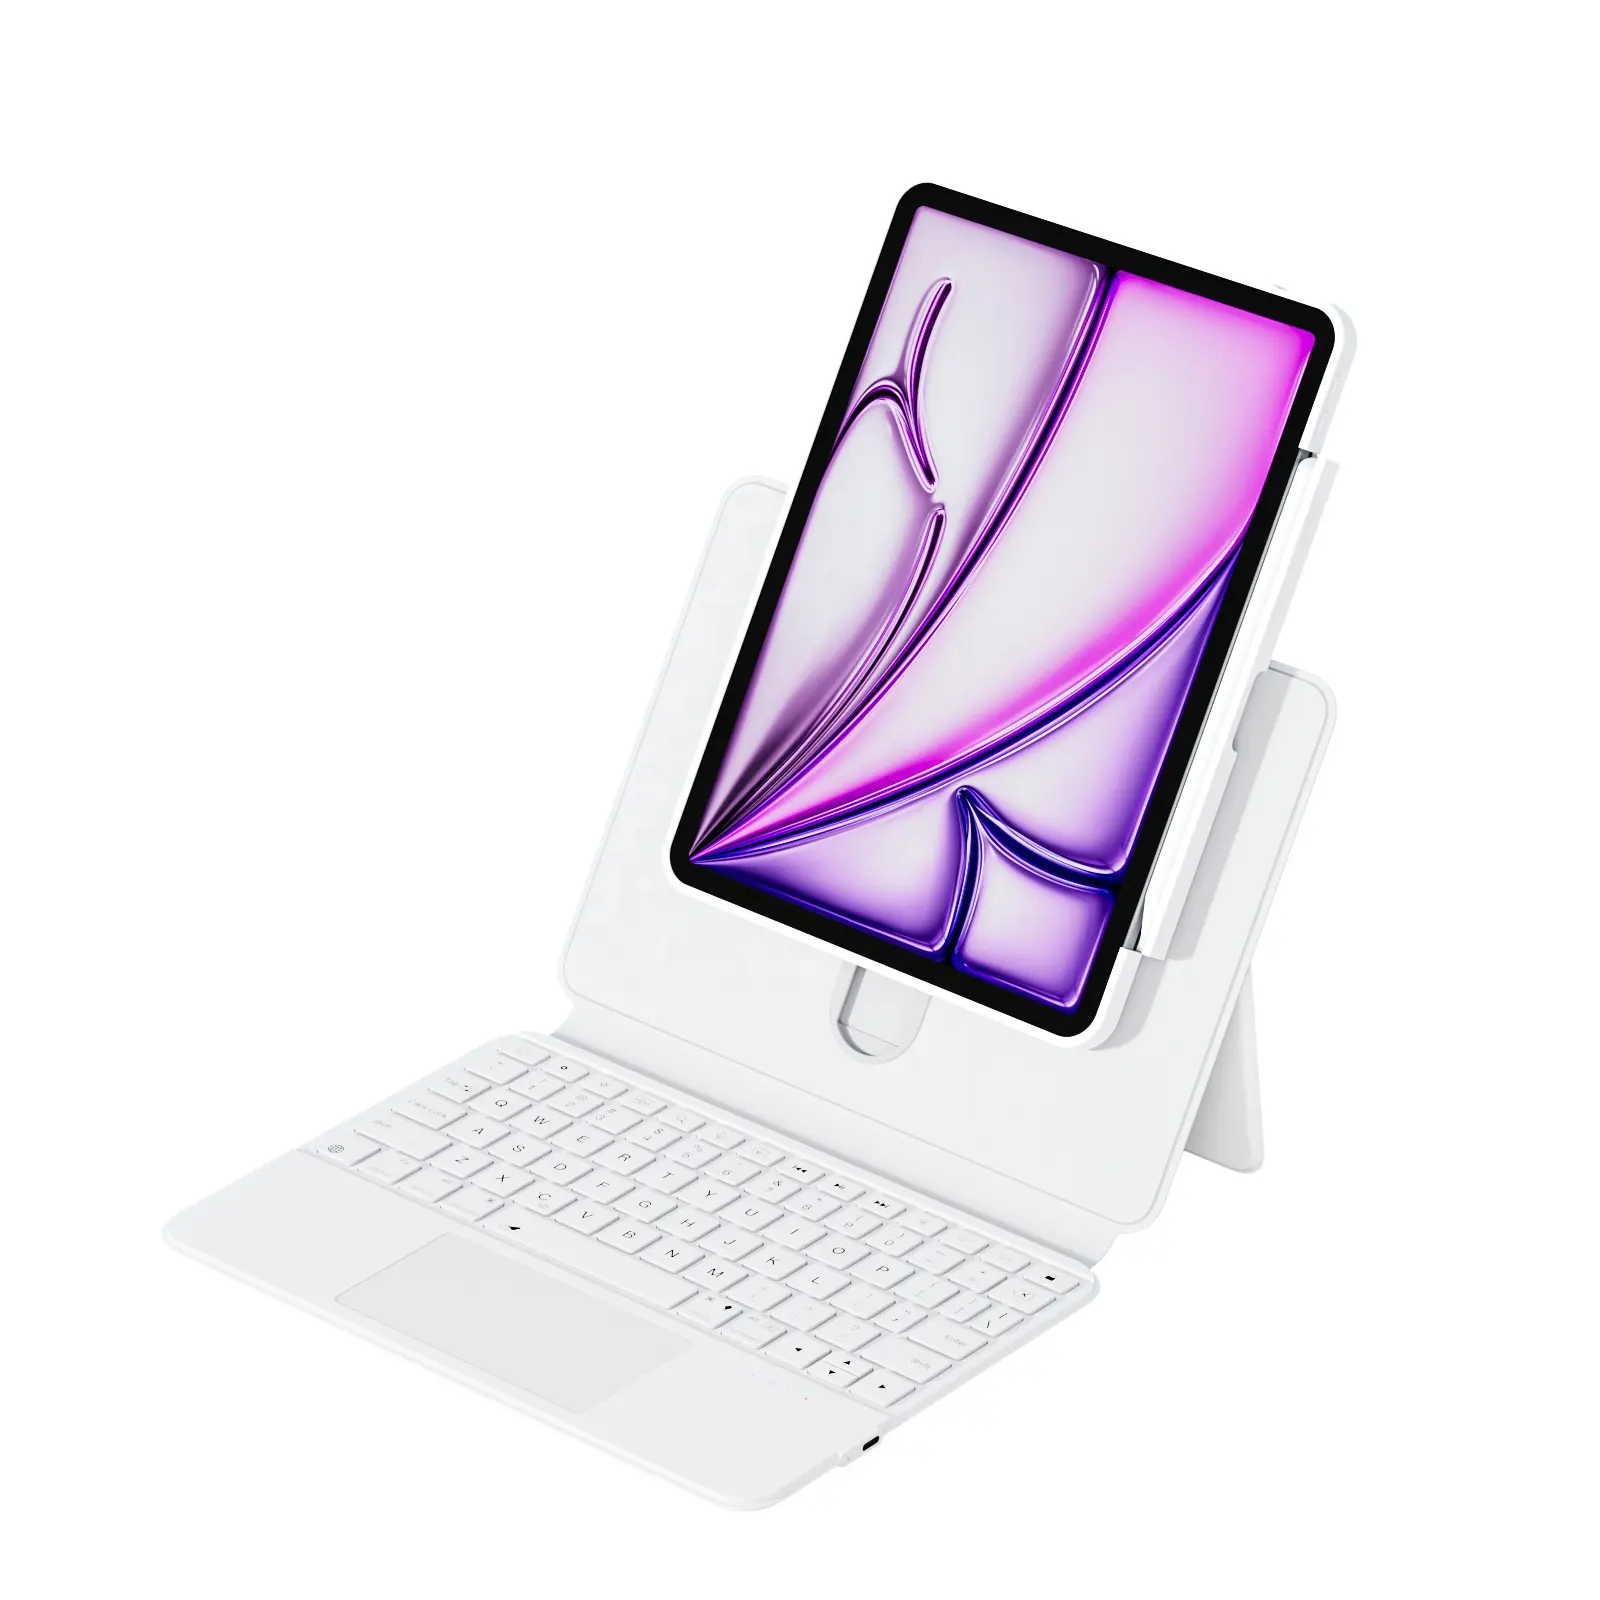 आईपैड स्मार्ट वायरलेस बीटी टैबलेट केस कवर फोलियो के लिए आईफैकोमॉल मैजिक कीबोर्ड केस एलईडी बैकलिट टचपैड अरबी कीबोर्ड के साथ